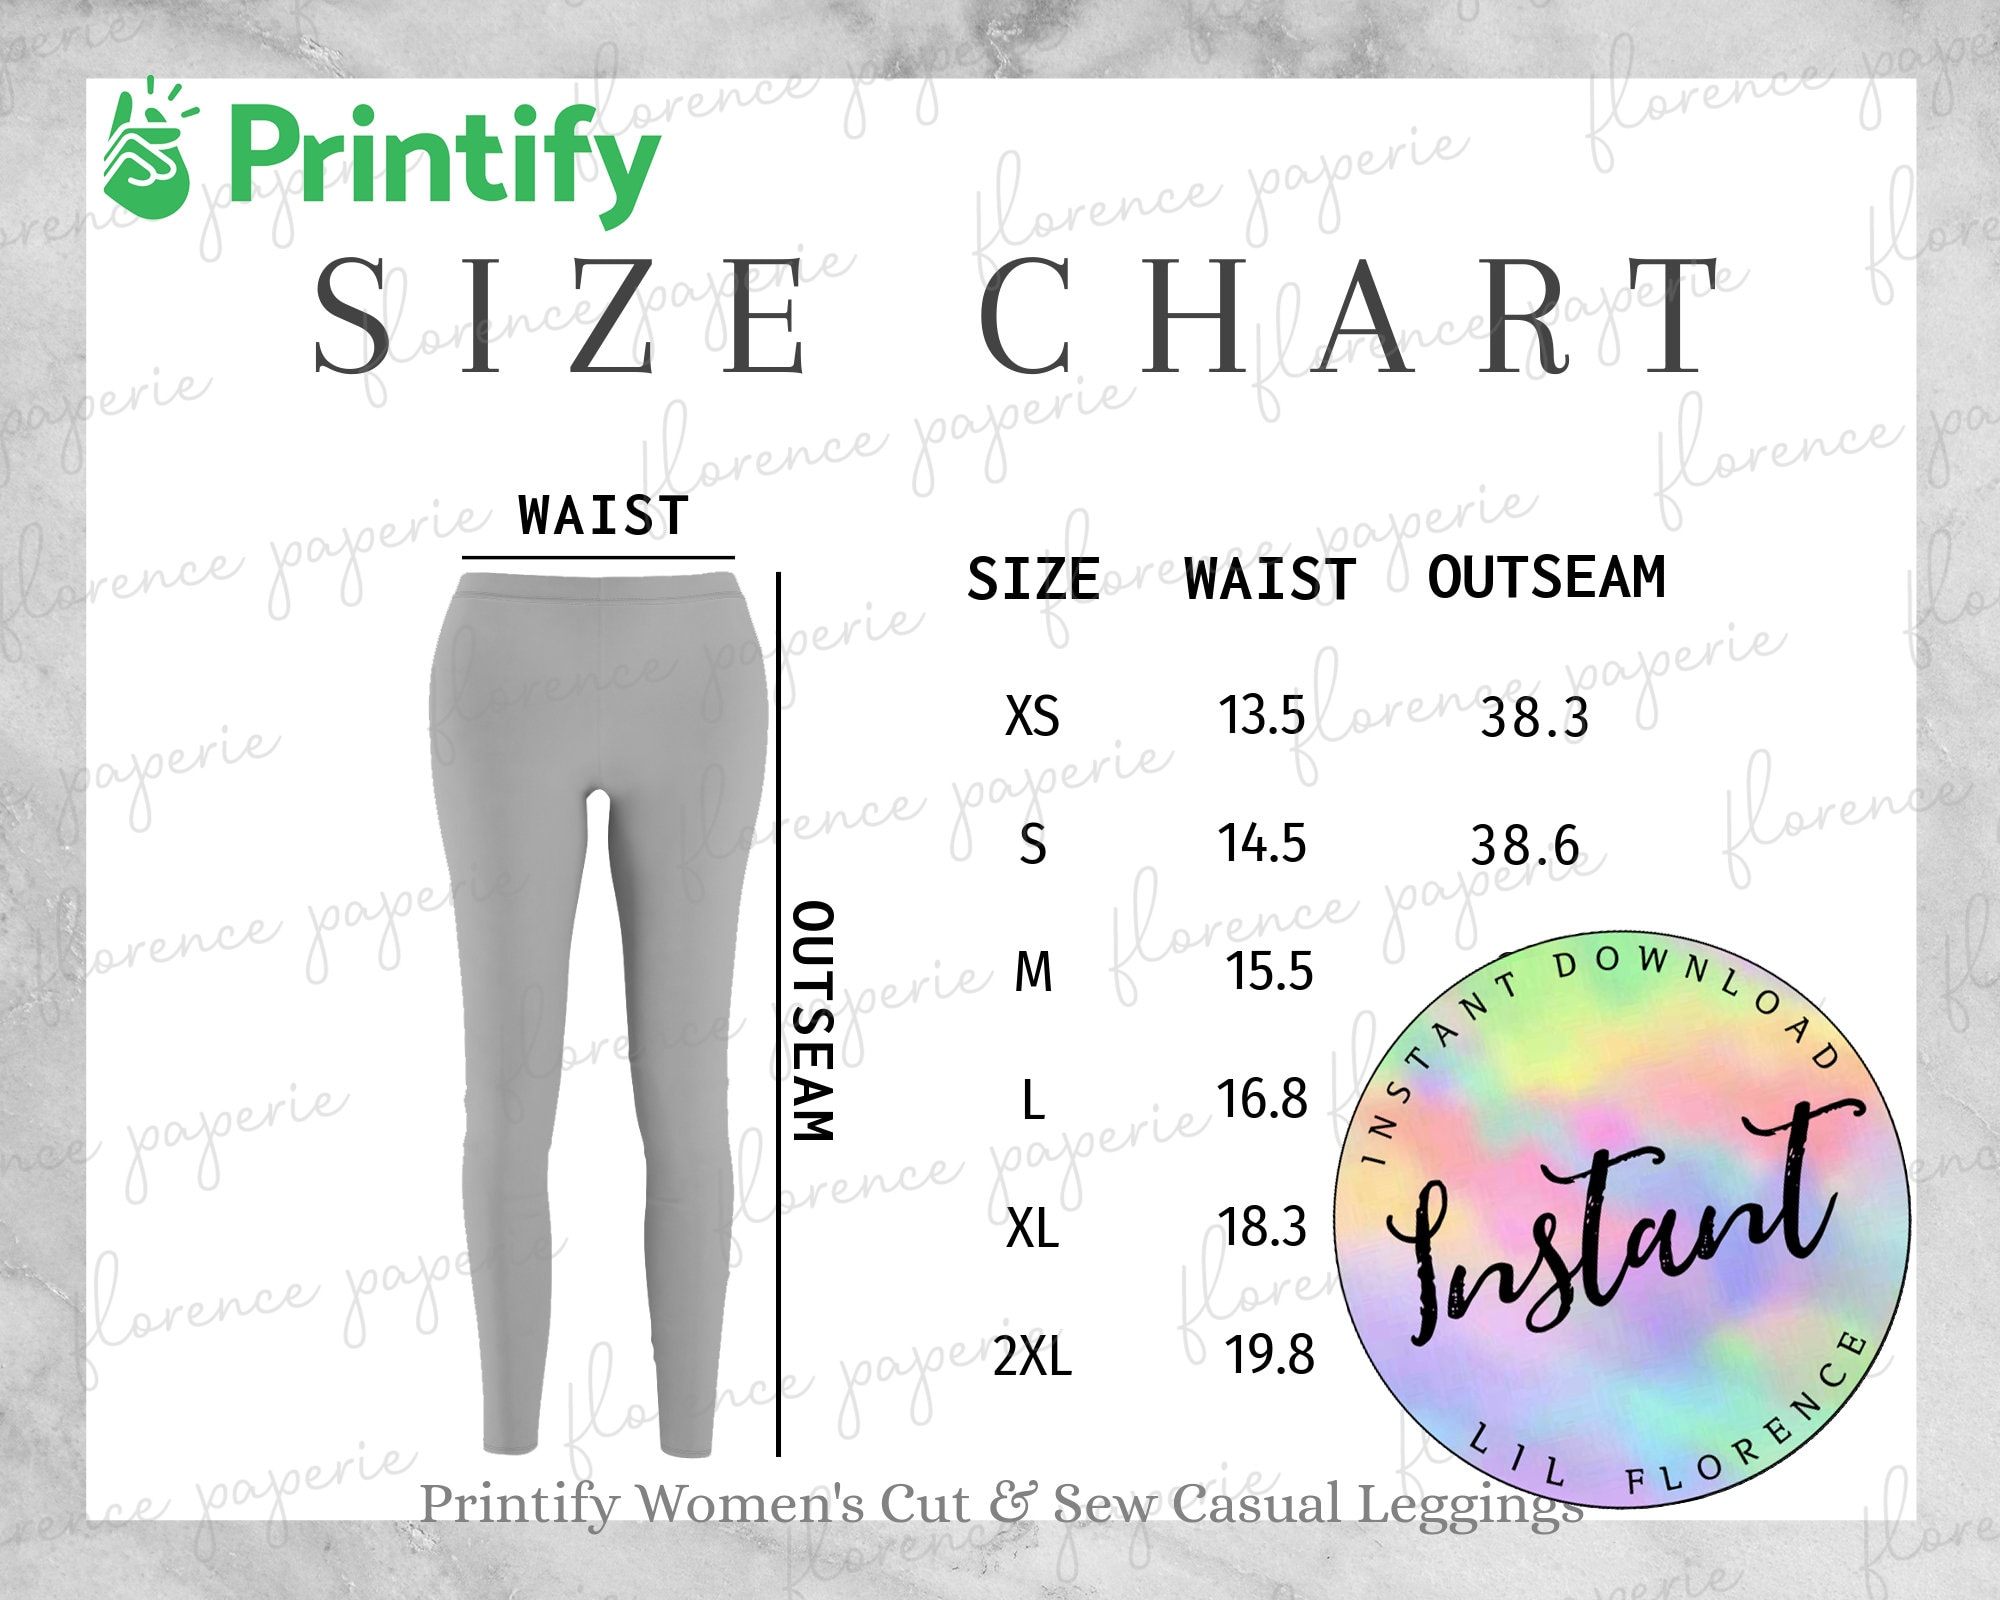 Leggings size chart | fits printify Women's Cut & Sew Casual Leggings |  print on demand pod shops 2020